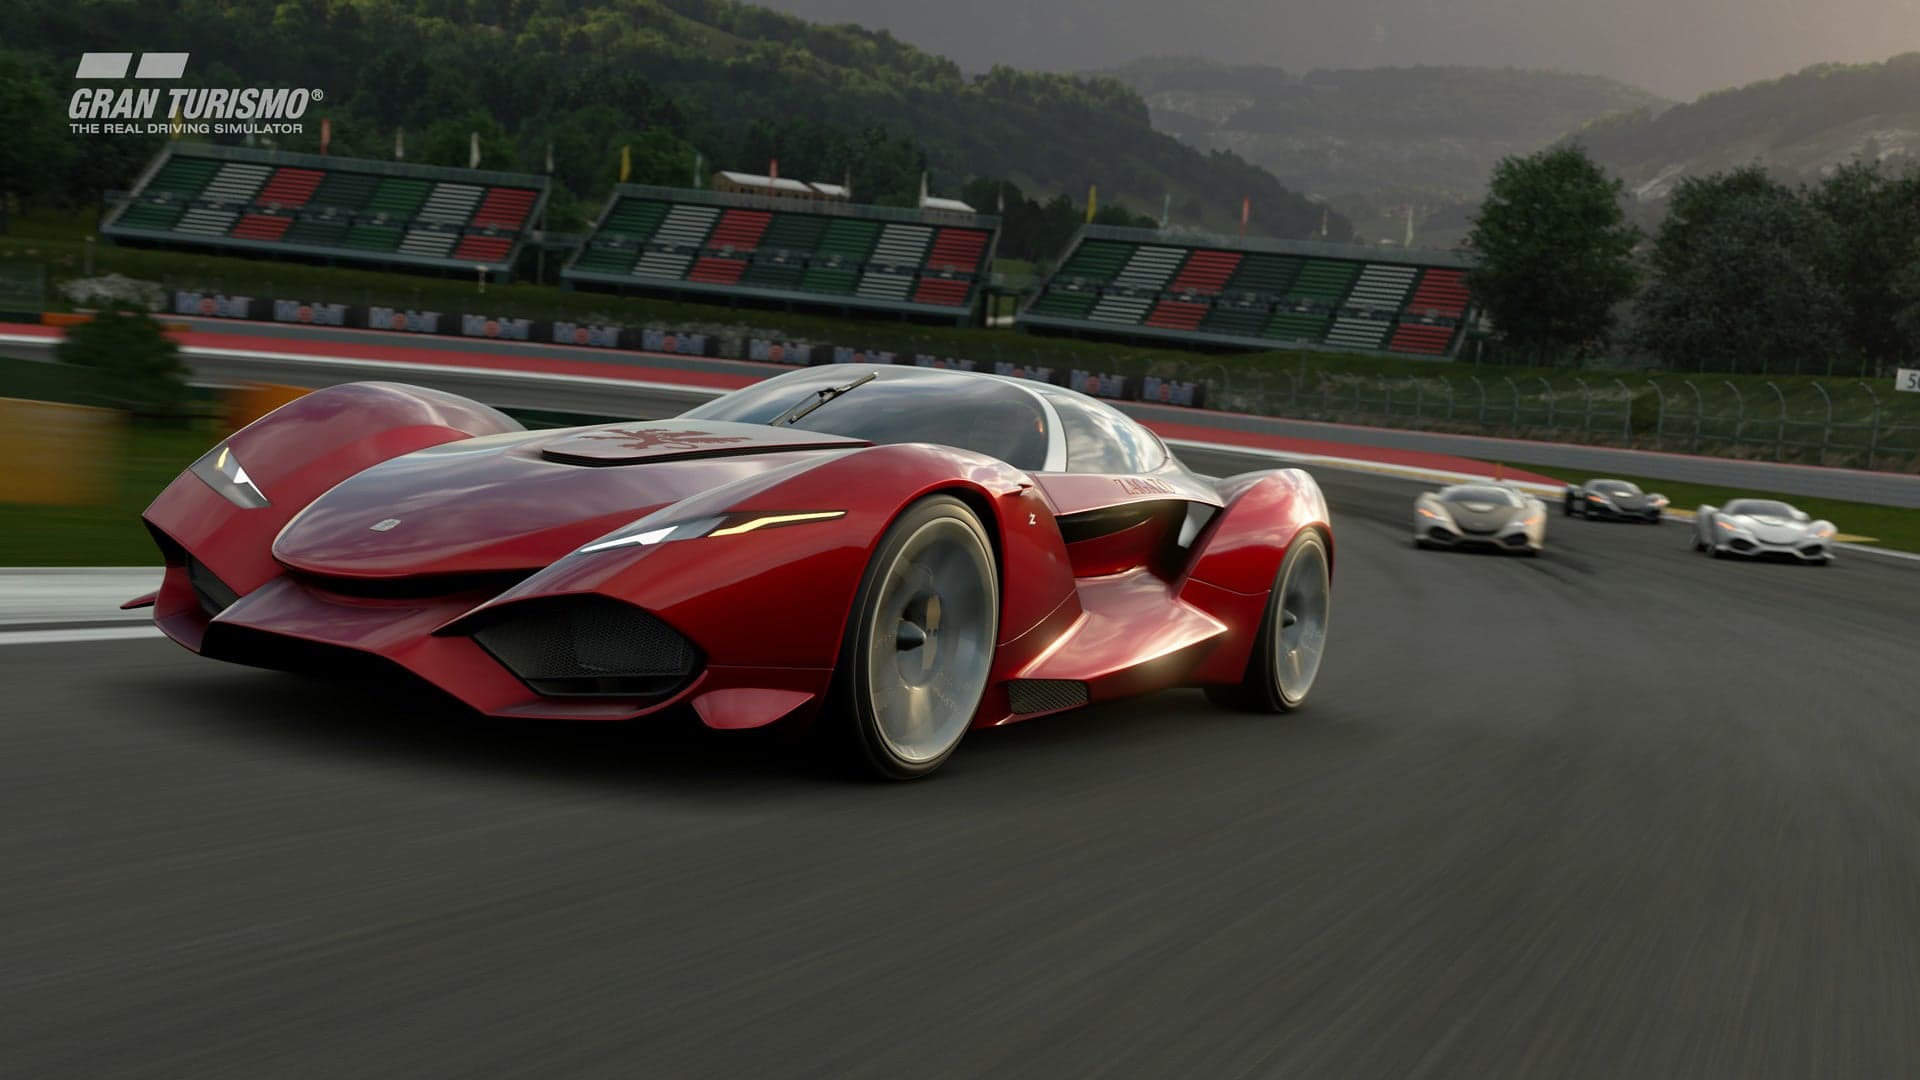 Gran Turismo Sport Free Updates Add Singleplayer Campaign, 15 New Cars